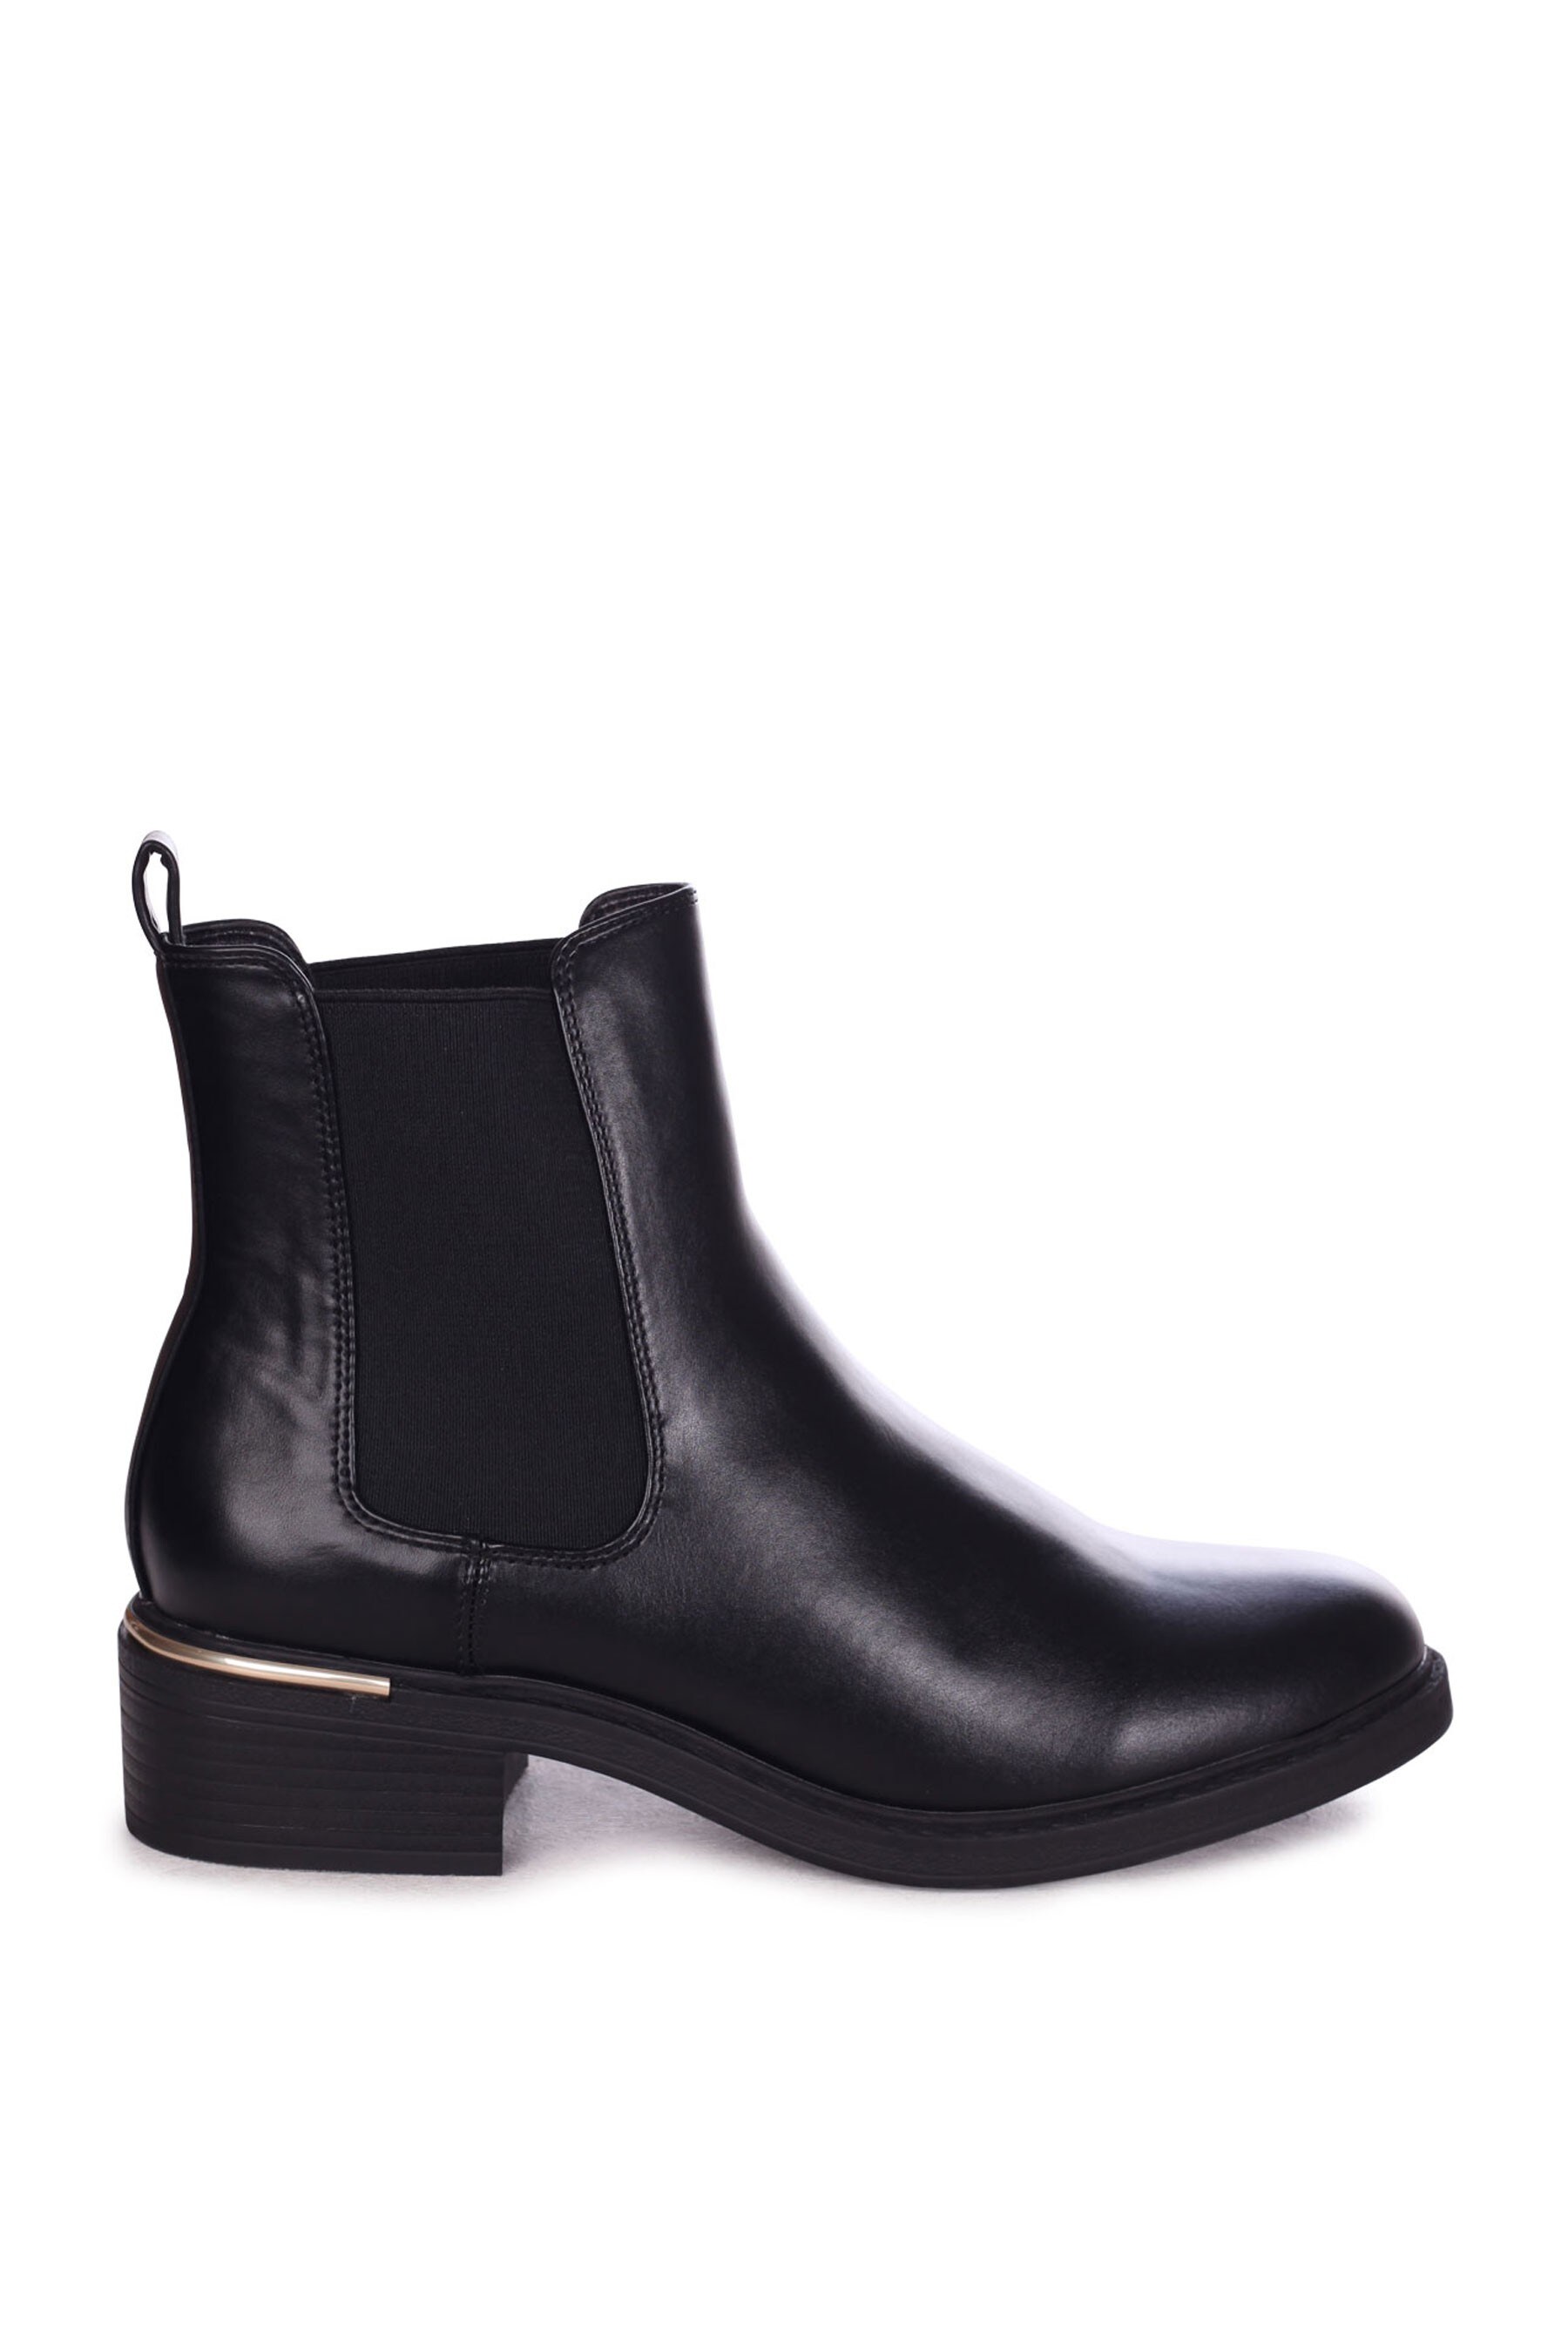 Buy Linzi Black Myth PU Trim Heel Chelsea Boot from the Next UK online shop